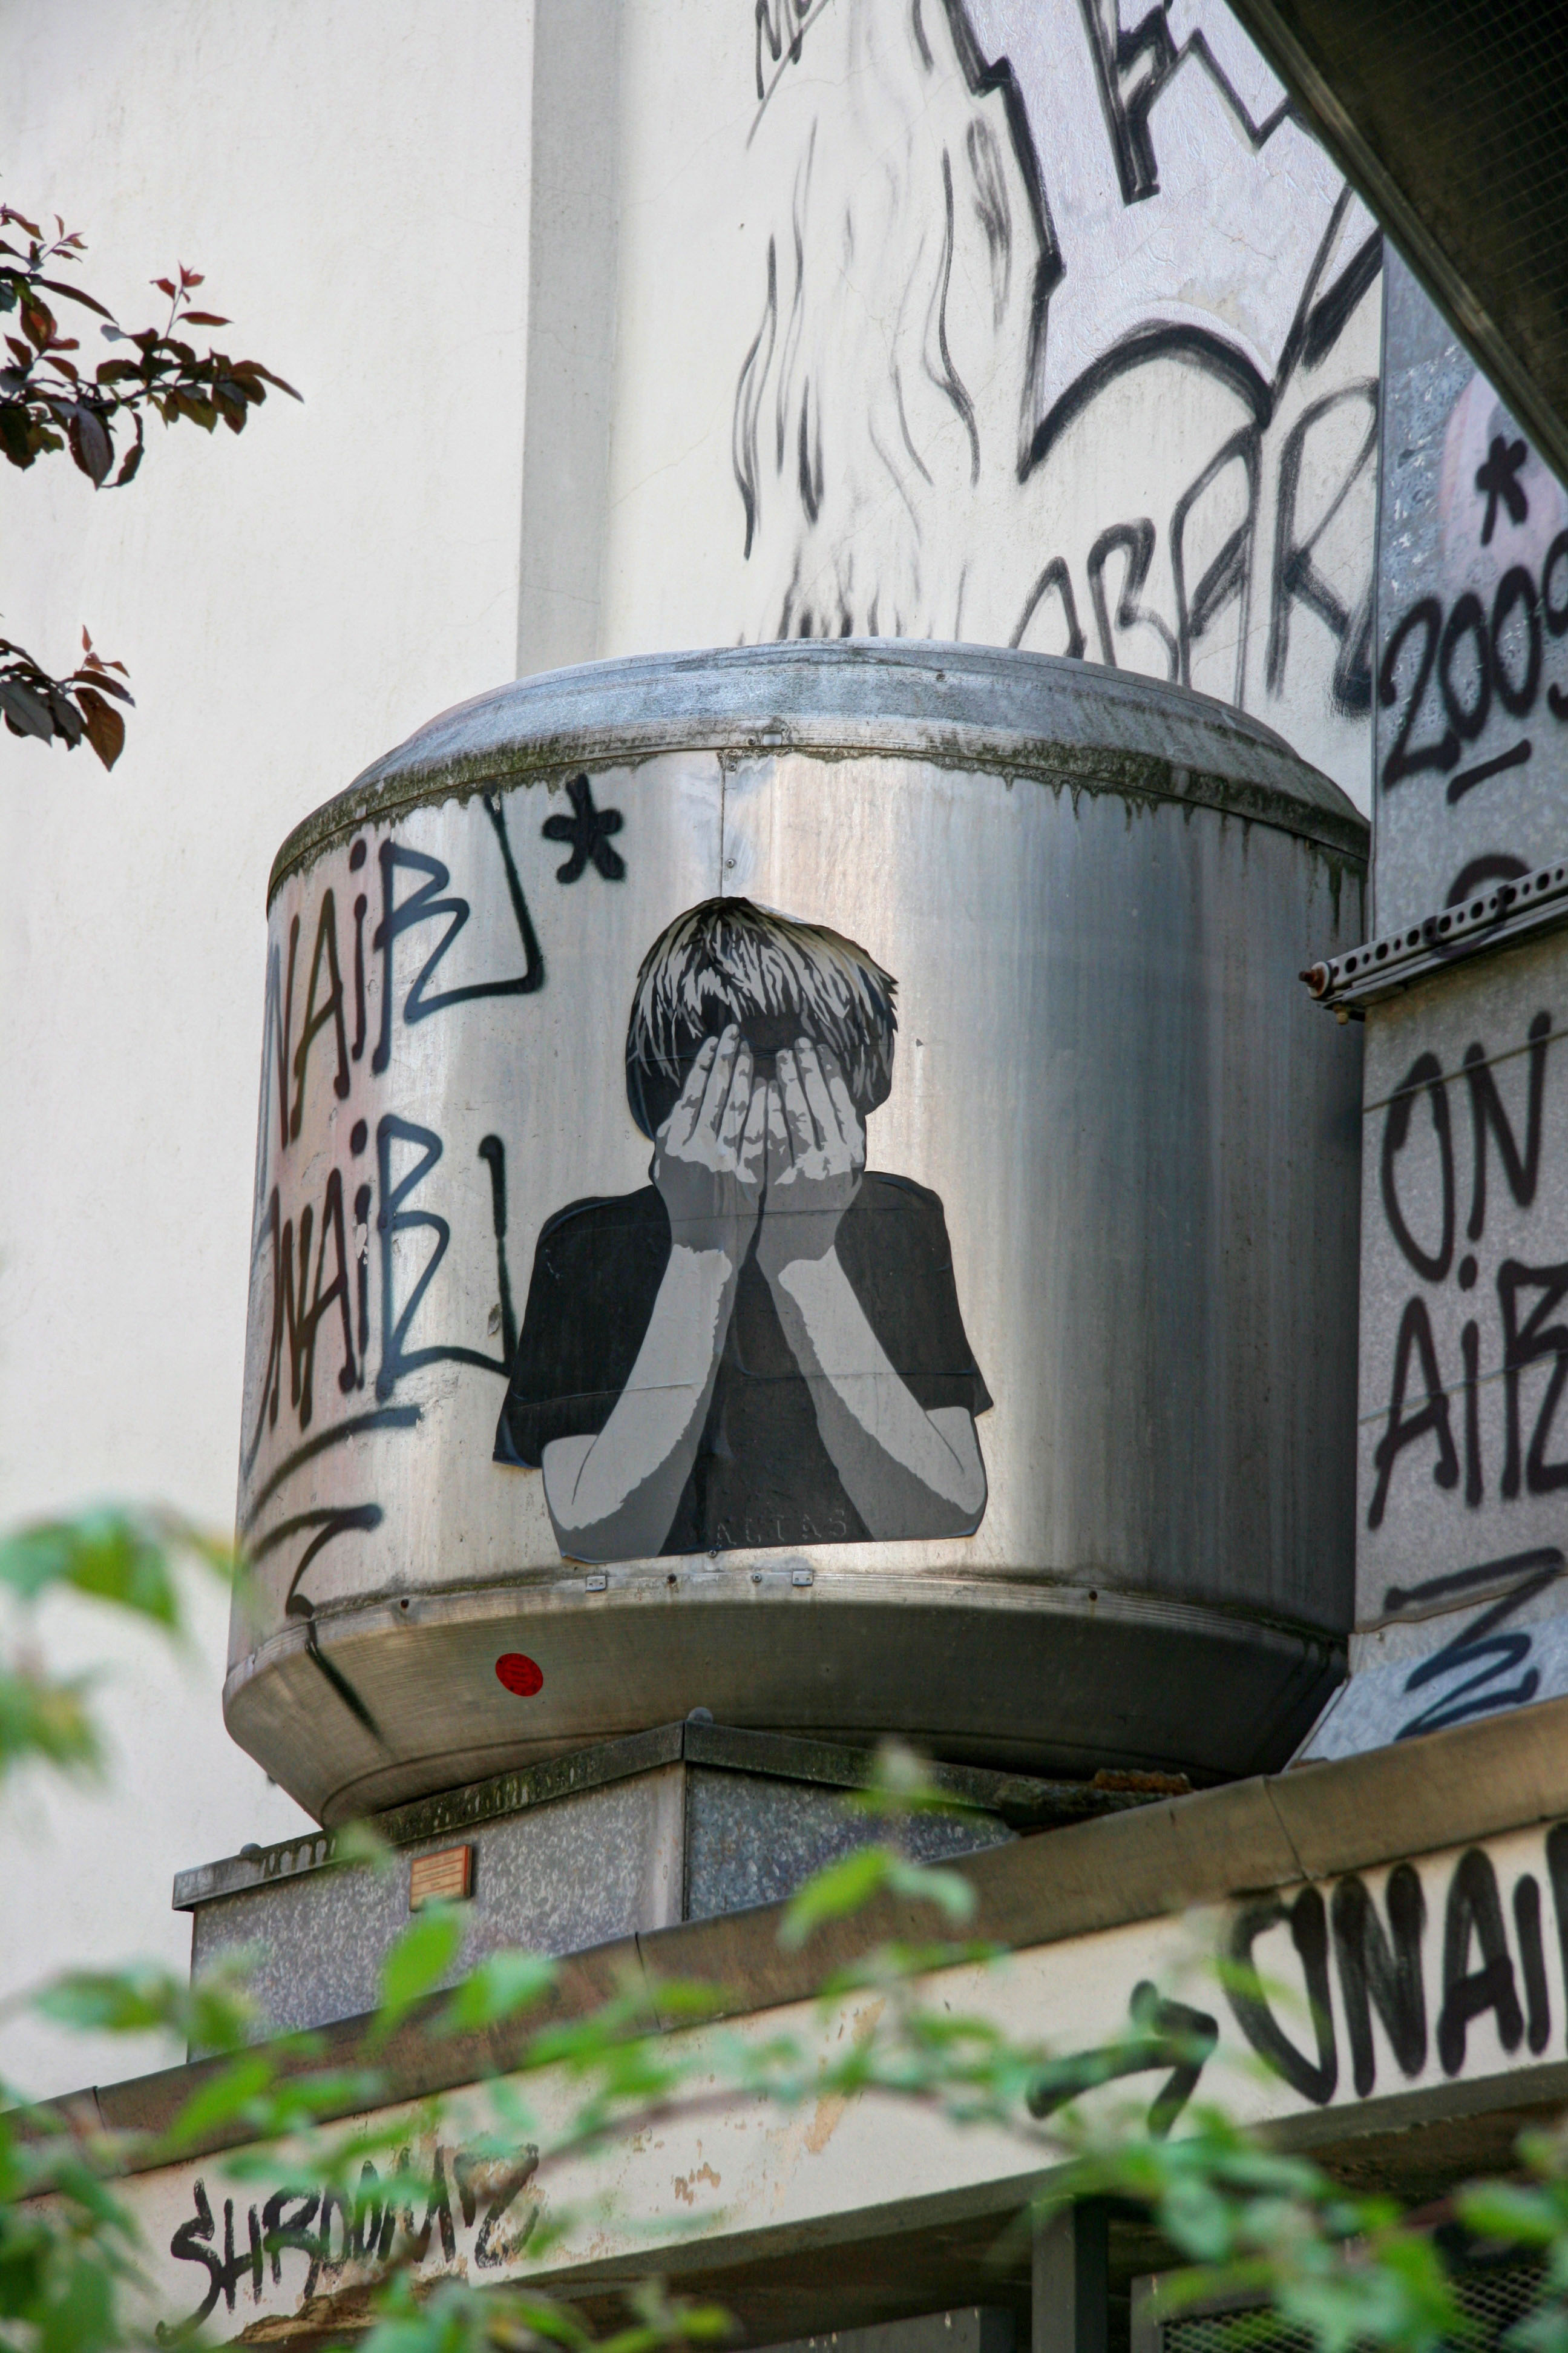 Count to 10 - Street Art by ALIAS in Berlin